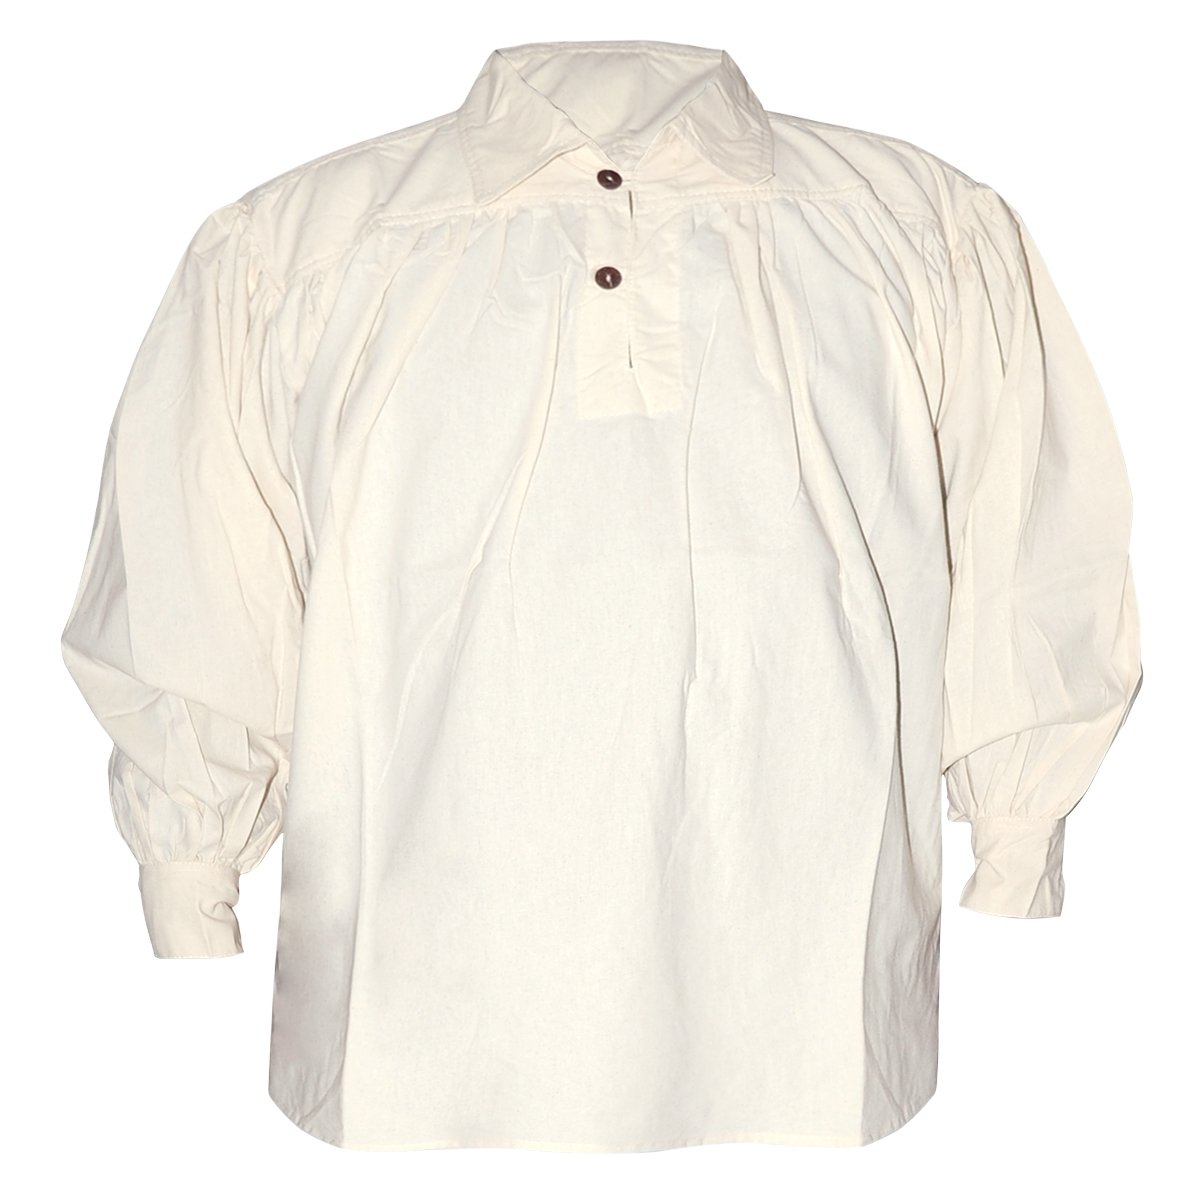 Cotton Shirt, Collared, Button Neck, Natural, Size XXL